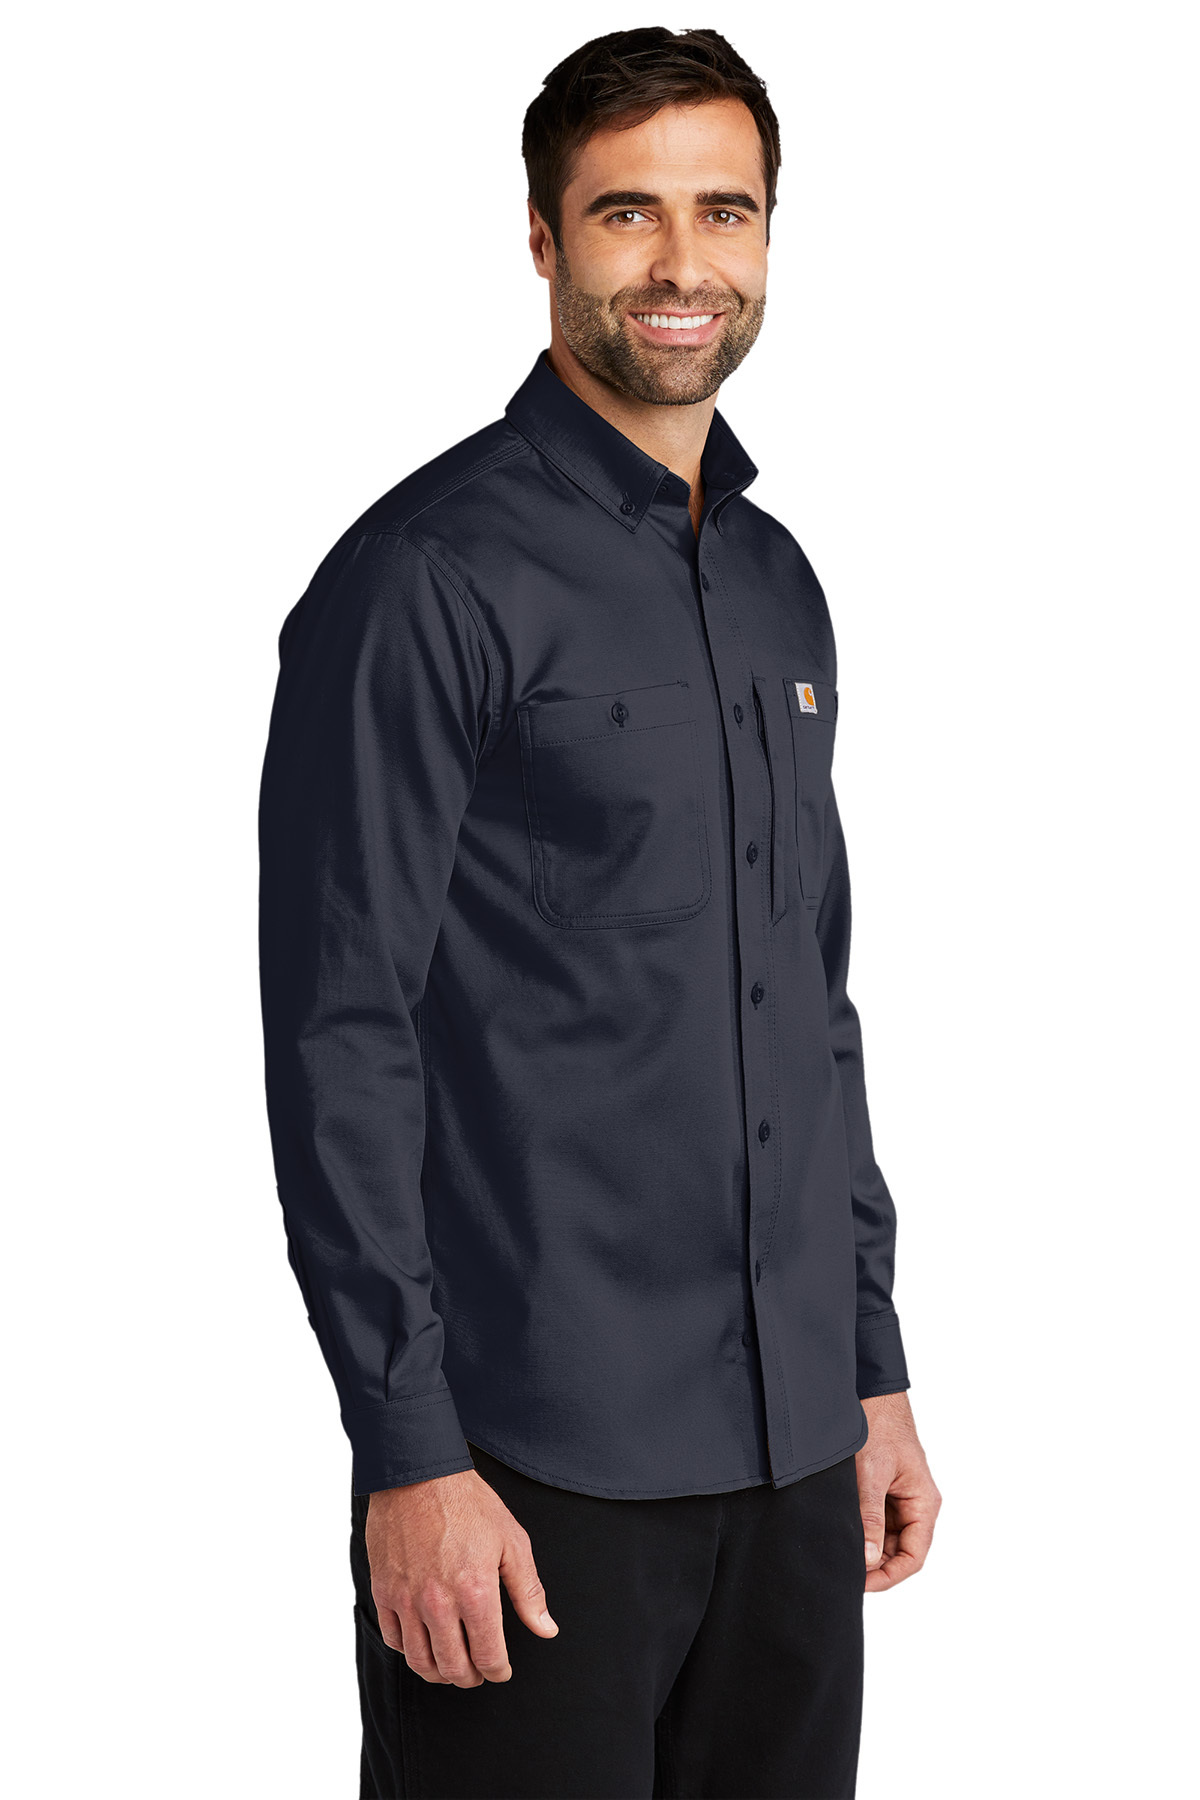 Carhartt Rugged Professional Series Long SanMar Sleeve | | Product Shirt